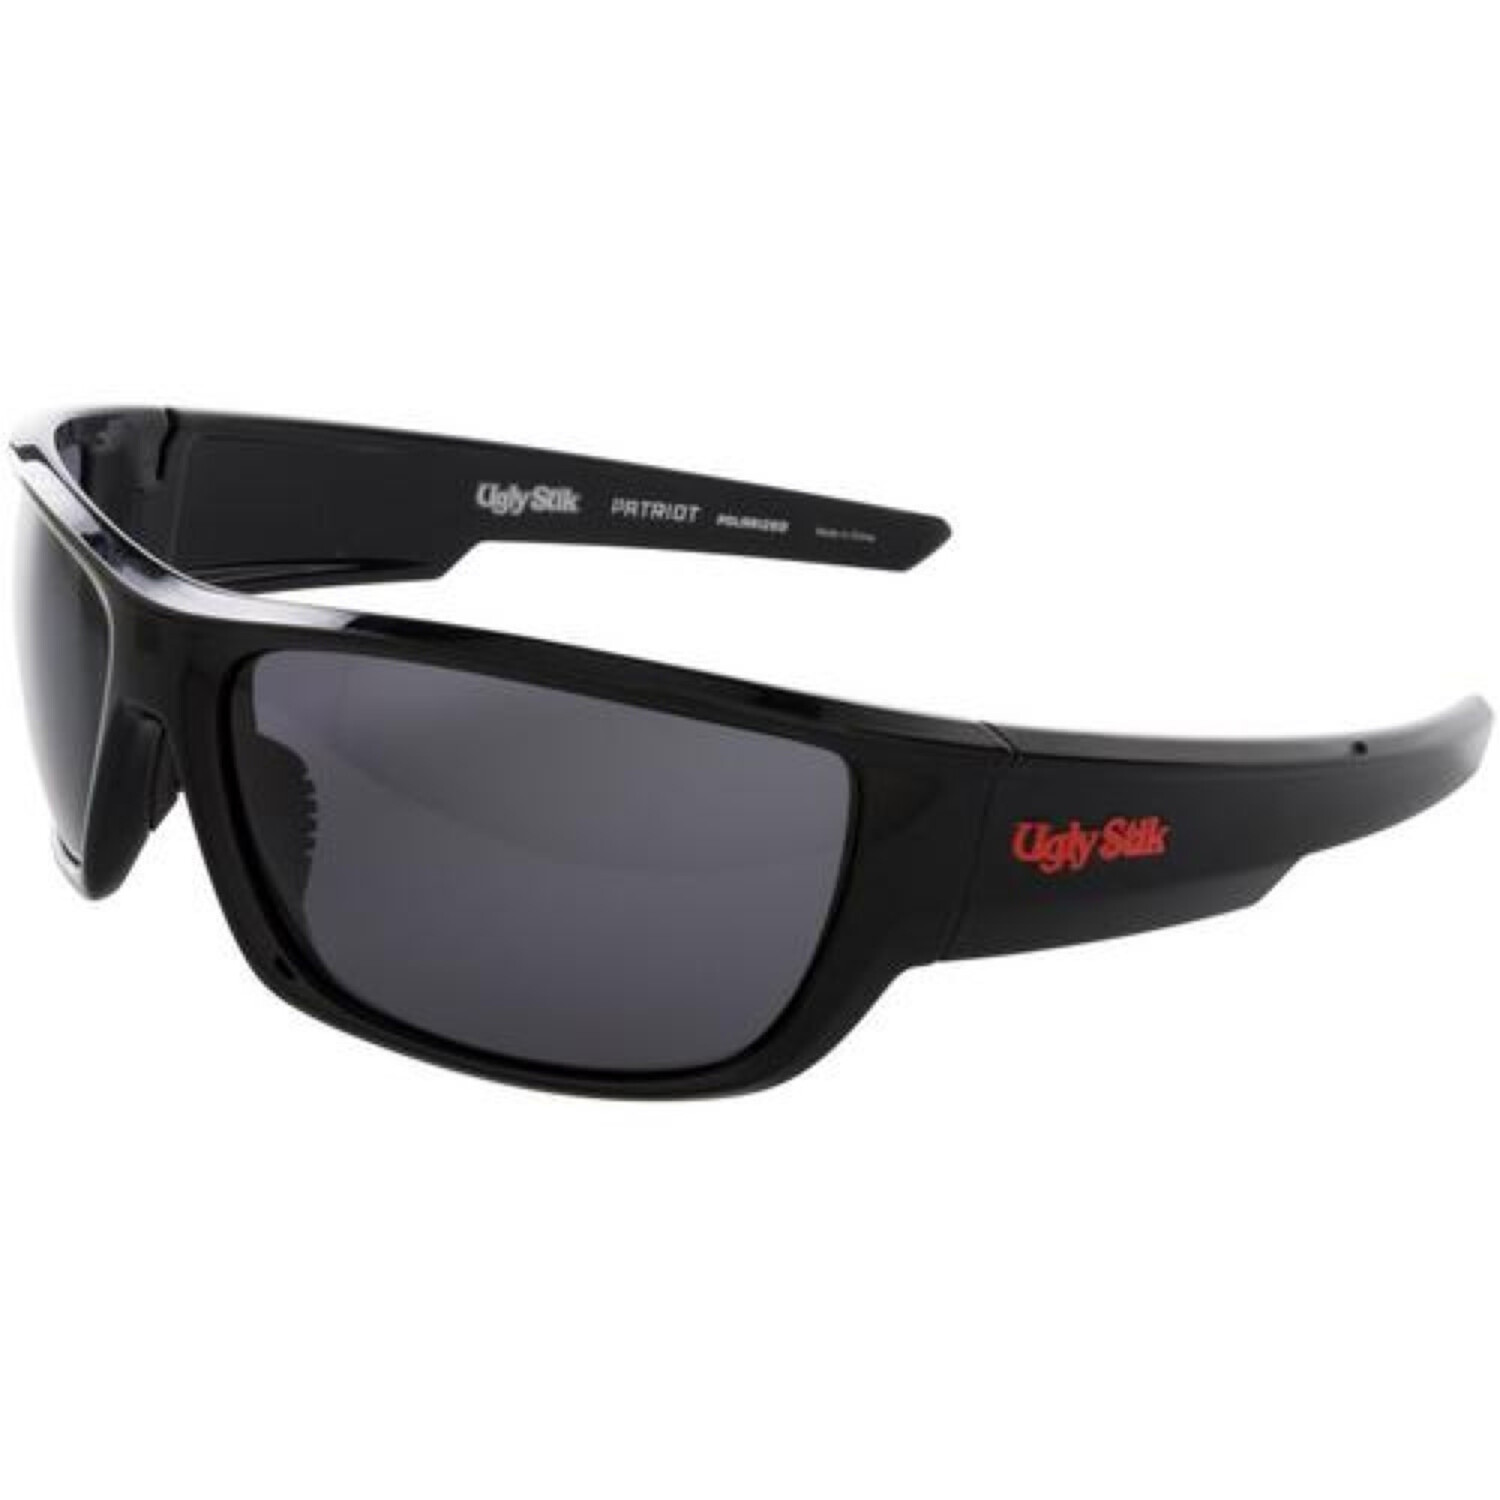 Ugly Stik Patriot Sunglasses Polarized Lens Grey - Fin-atics